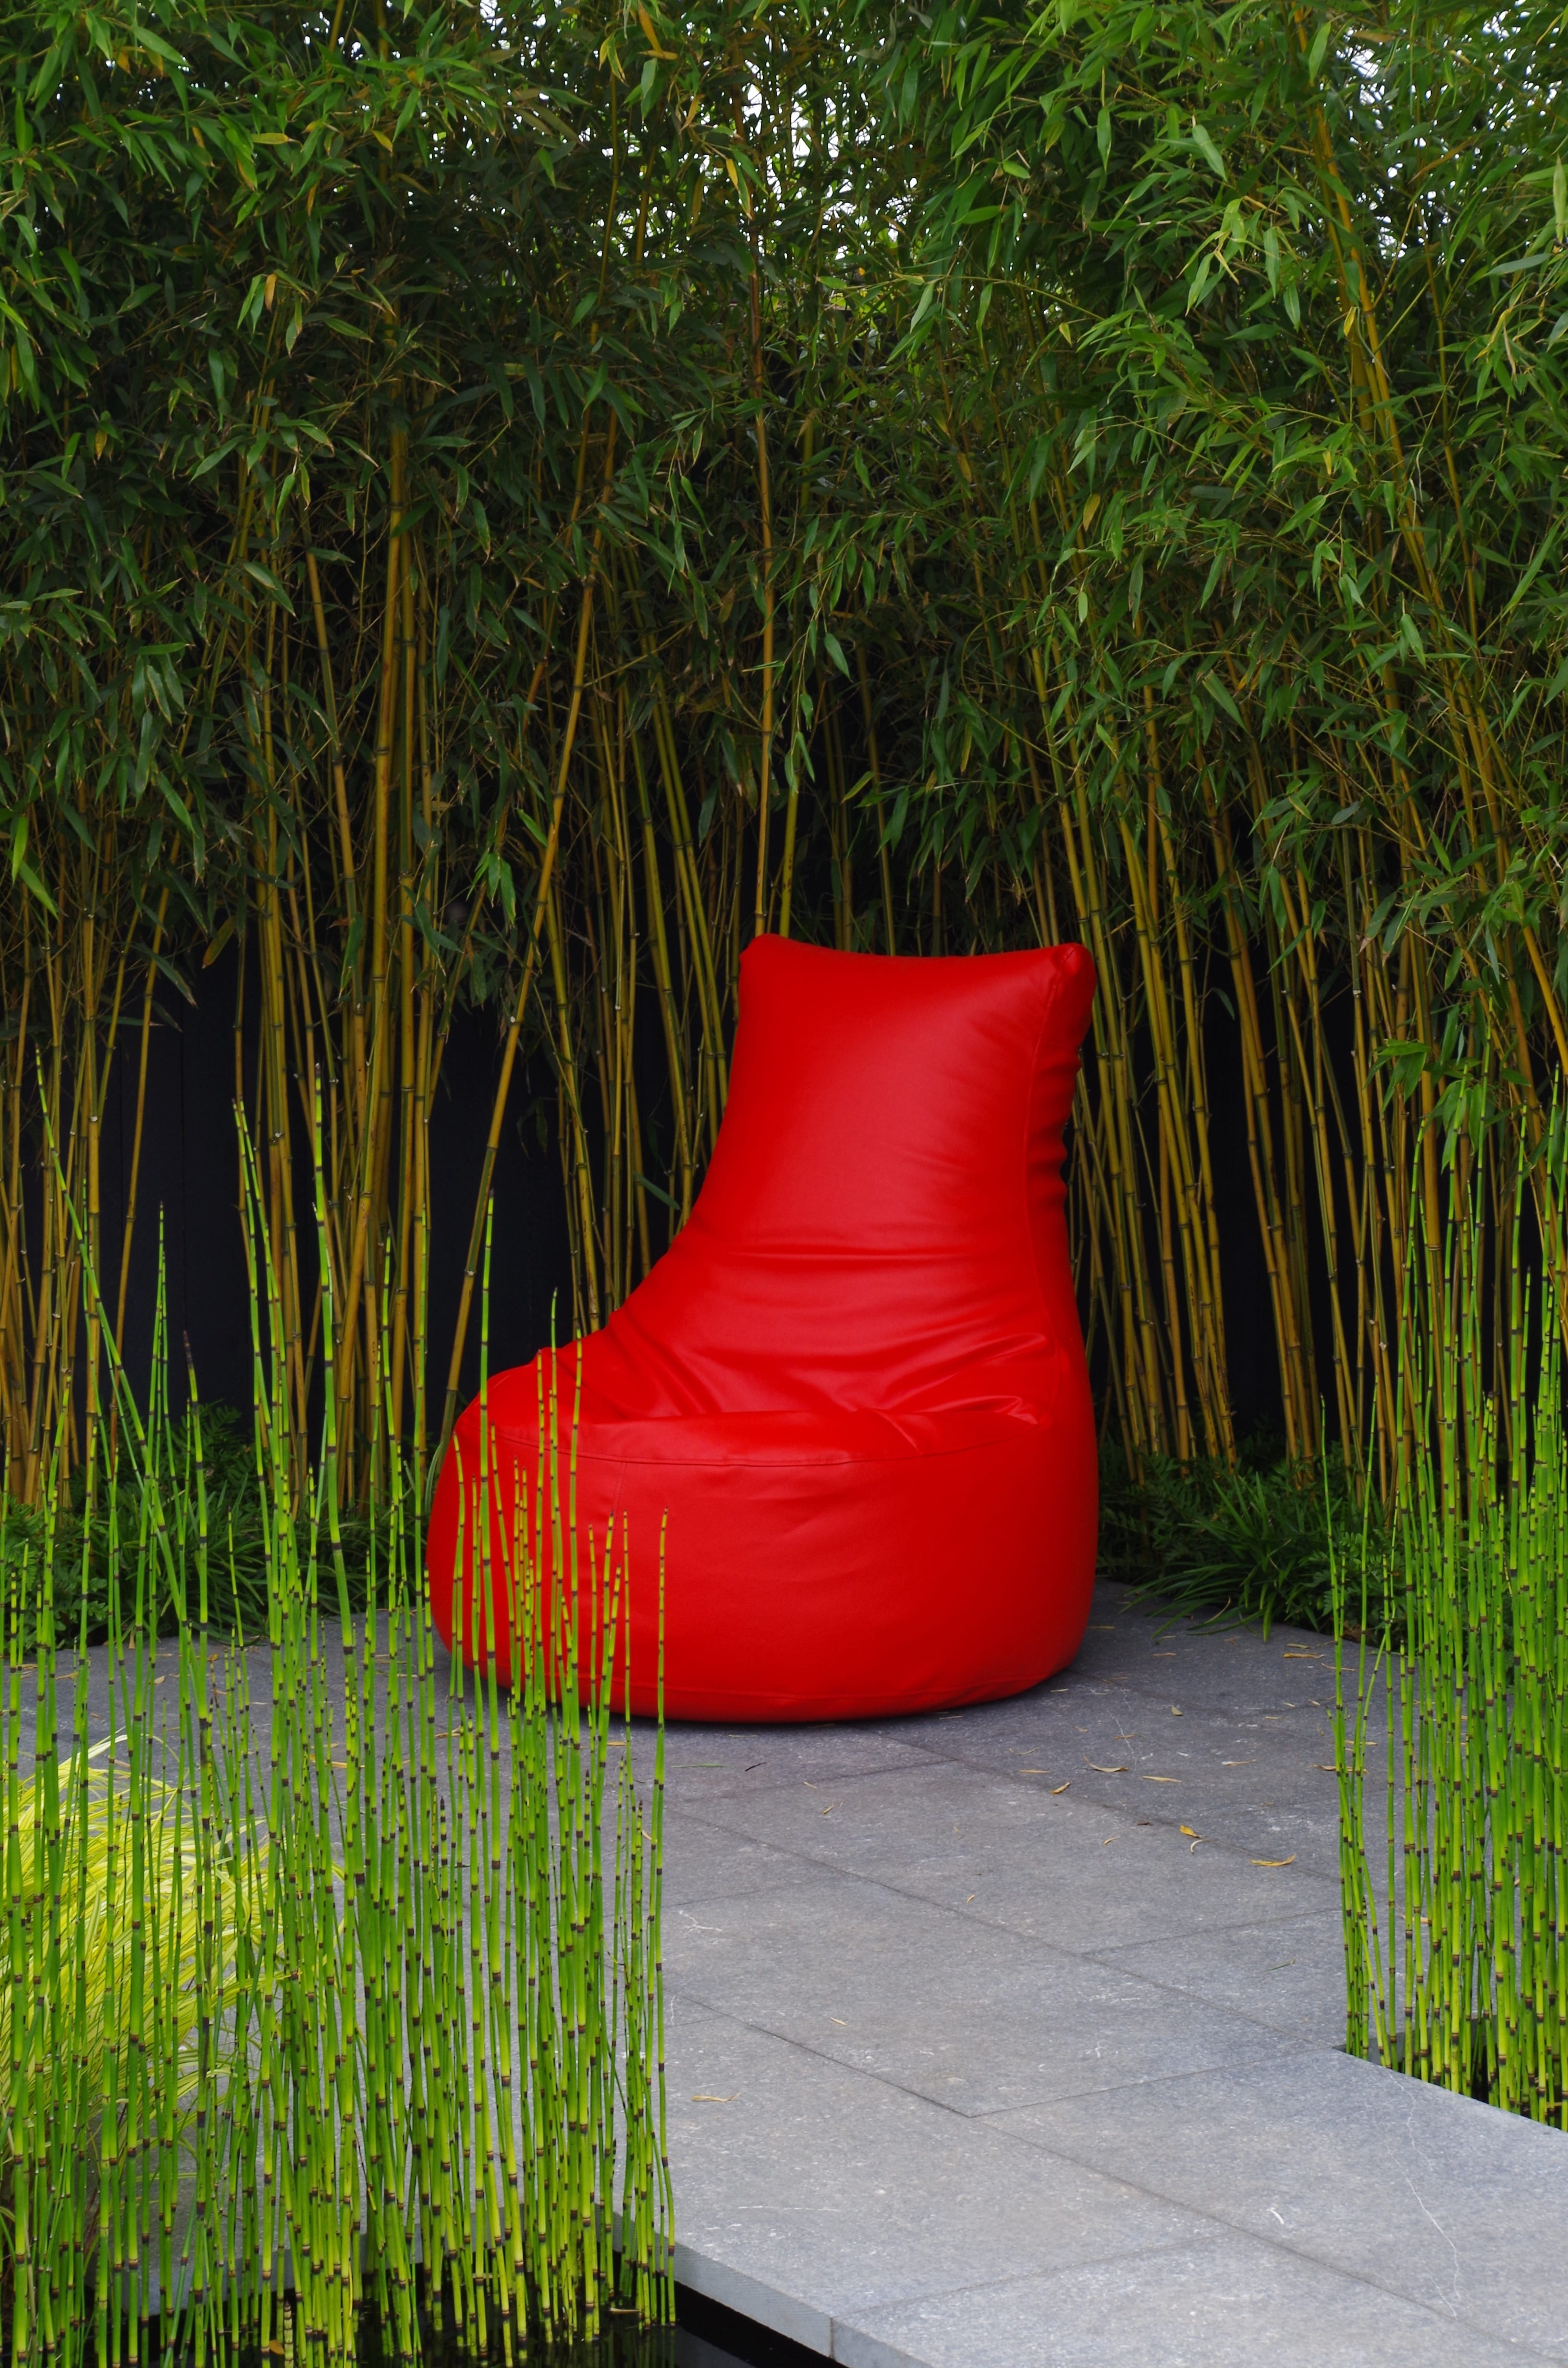 red bean bag, mindset, faq, green, chair, trees, willow, reeds